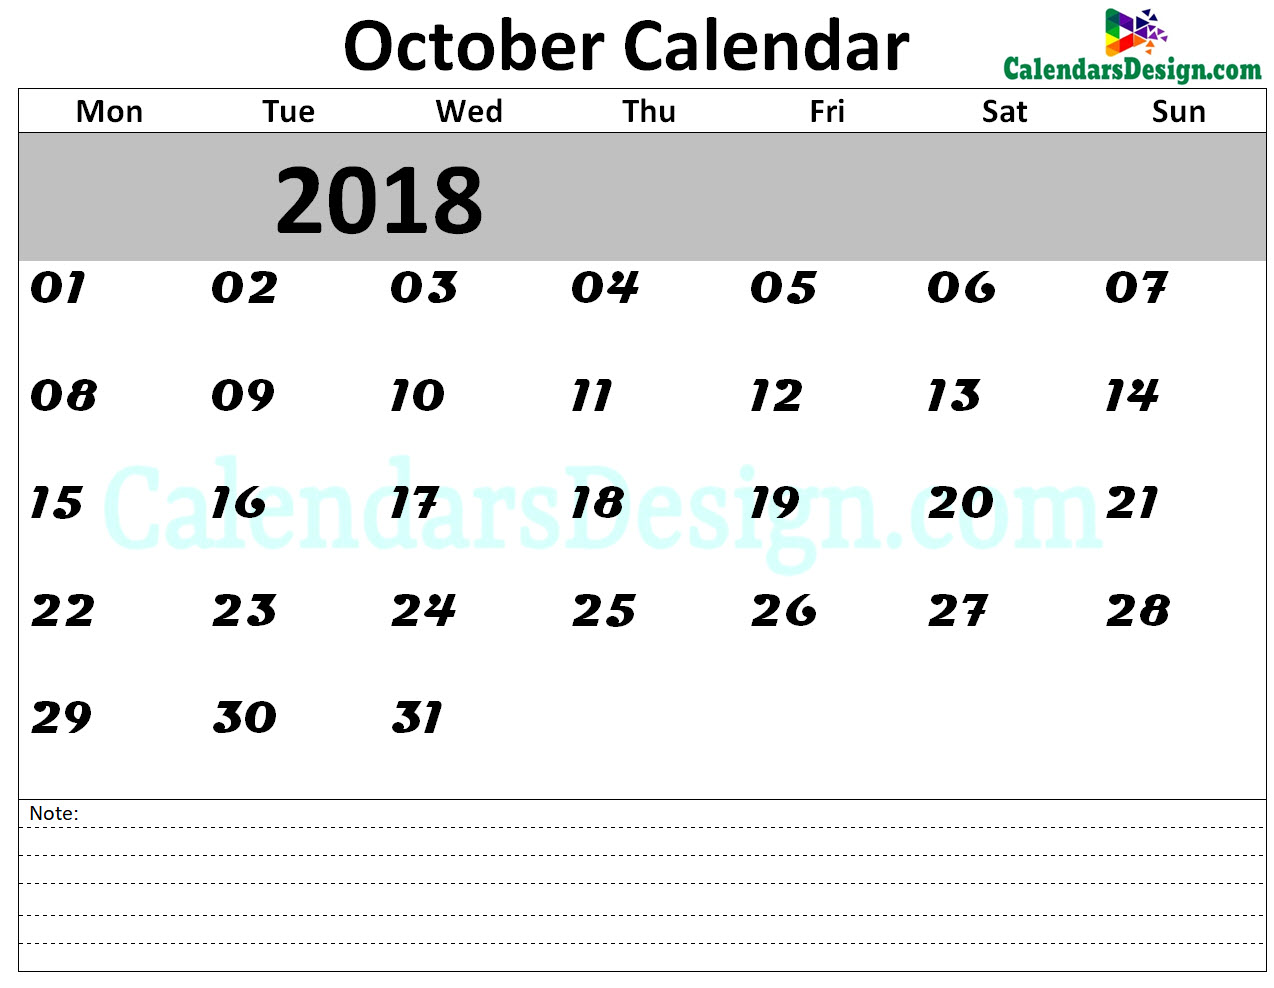 October Calendar 2018 Template